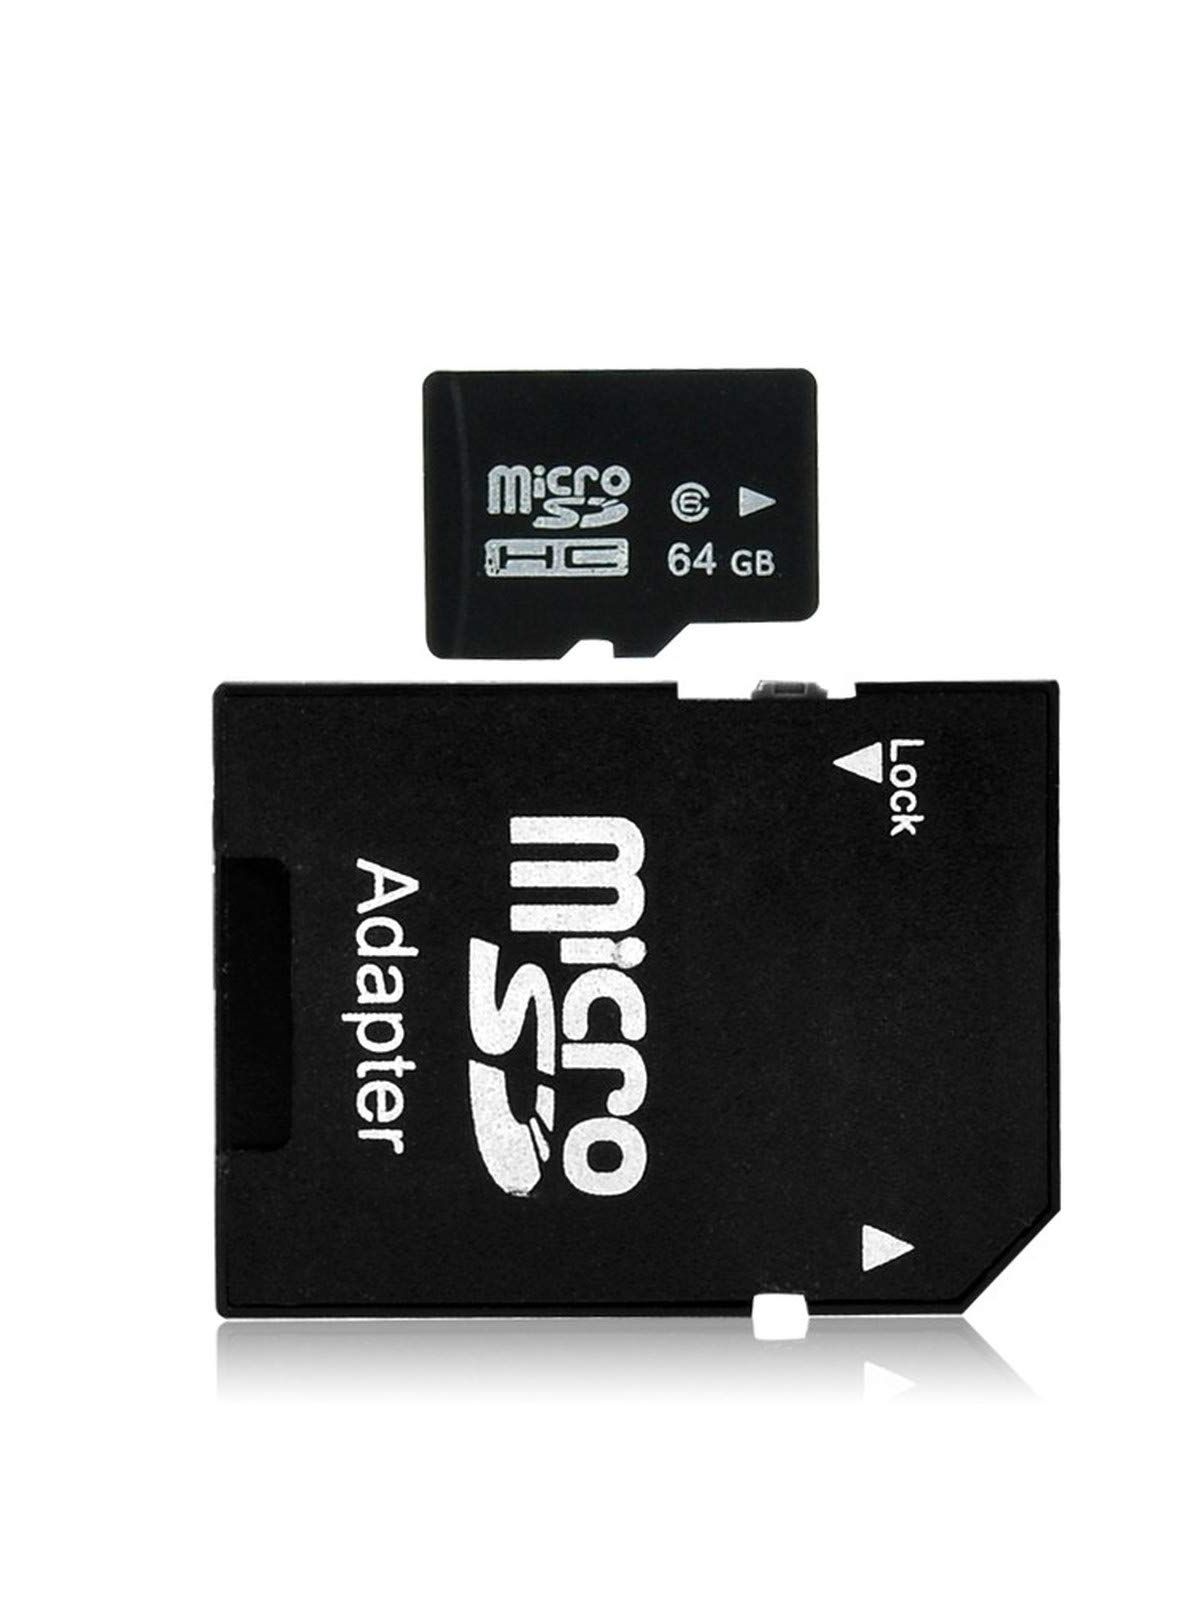 Встроенная память 64 гб. SD 64 GB. SD карта 64 ГБ. Карта памяти MICROSD 64gb. Карта памяти MICROSD 64 ГБ.